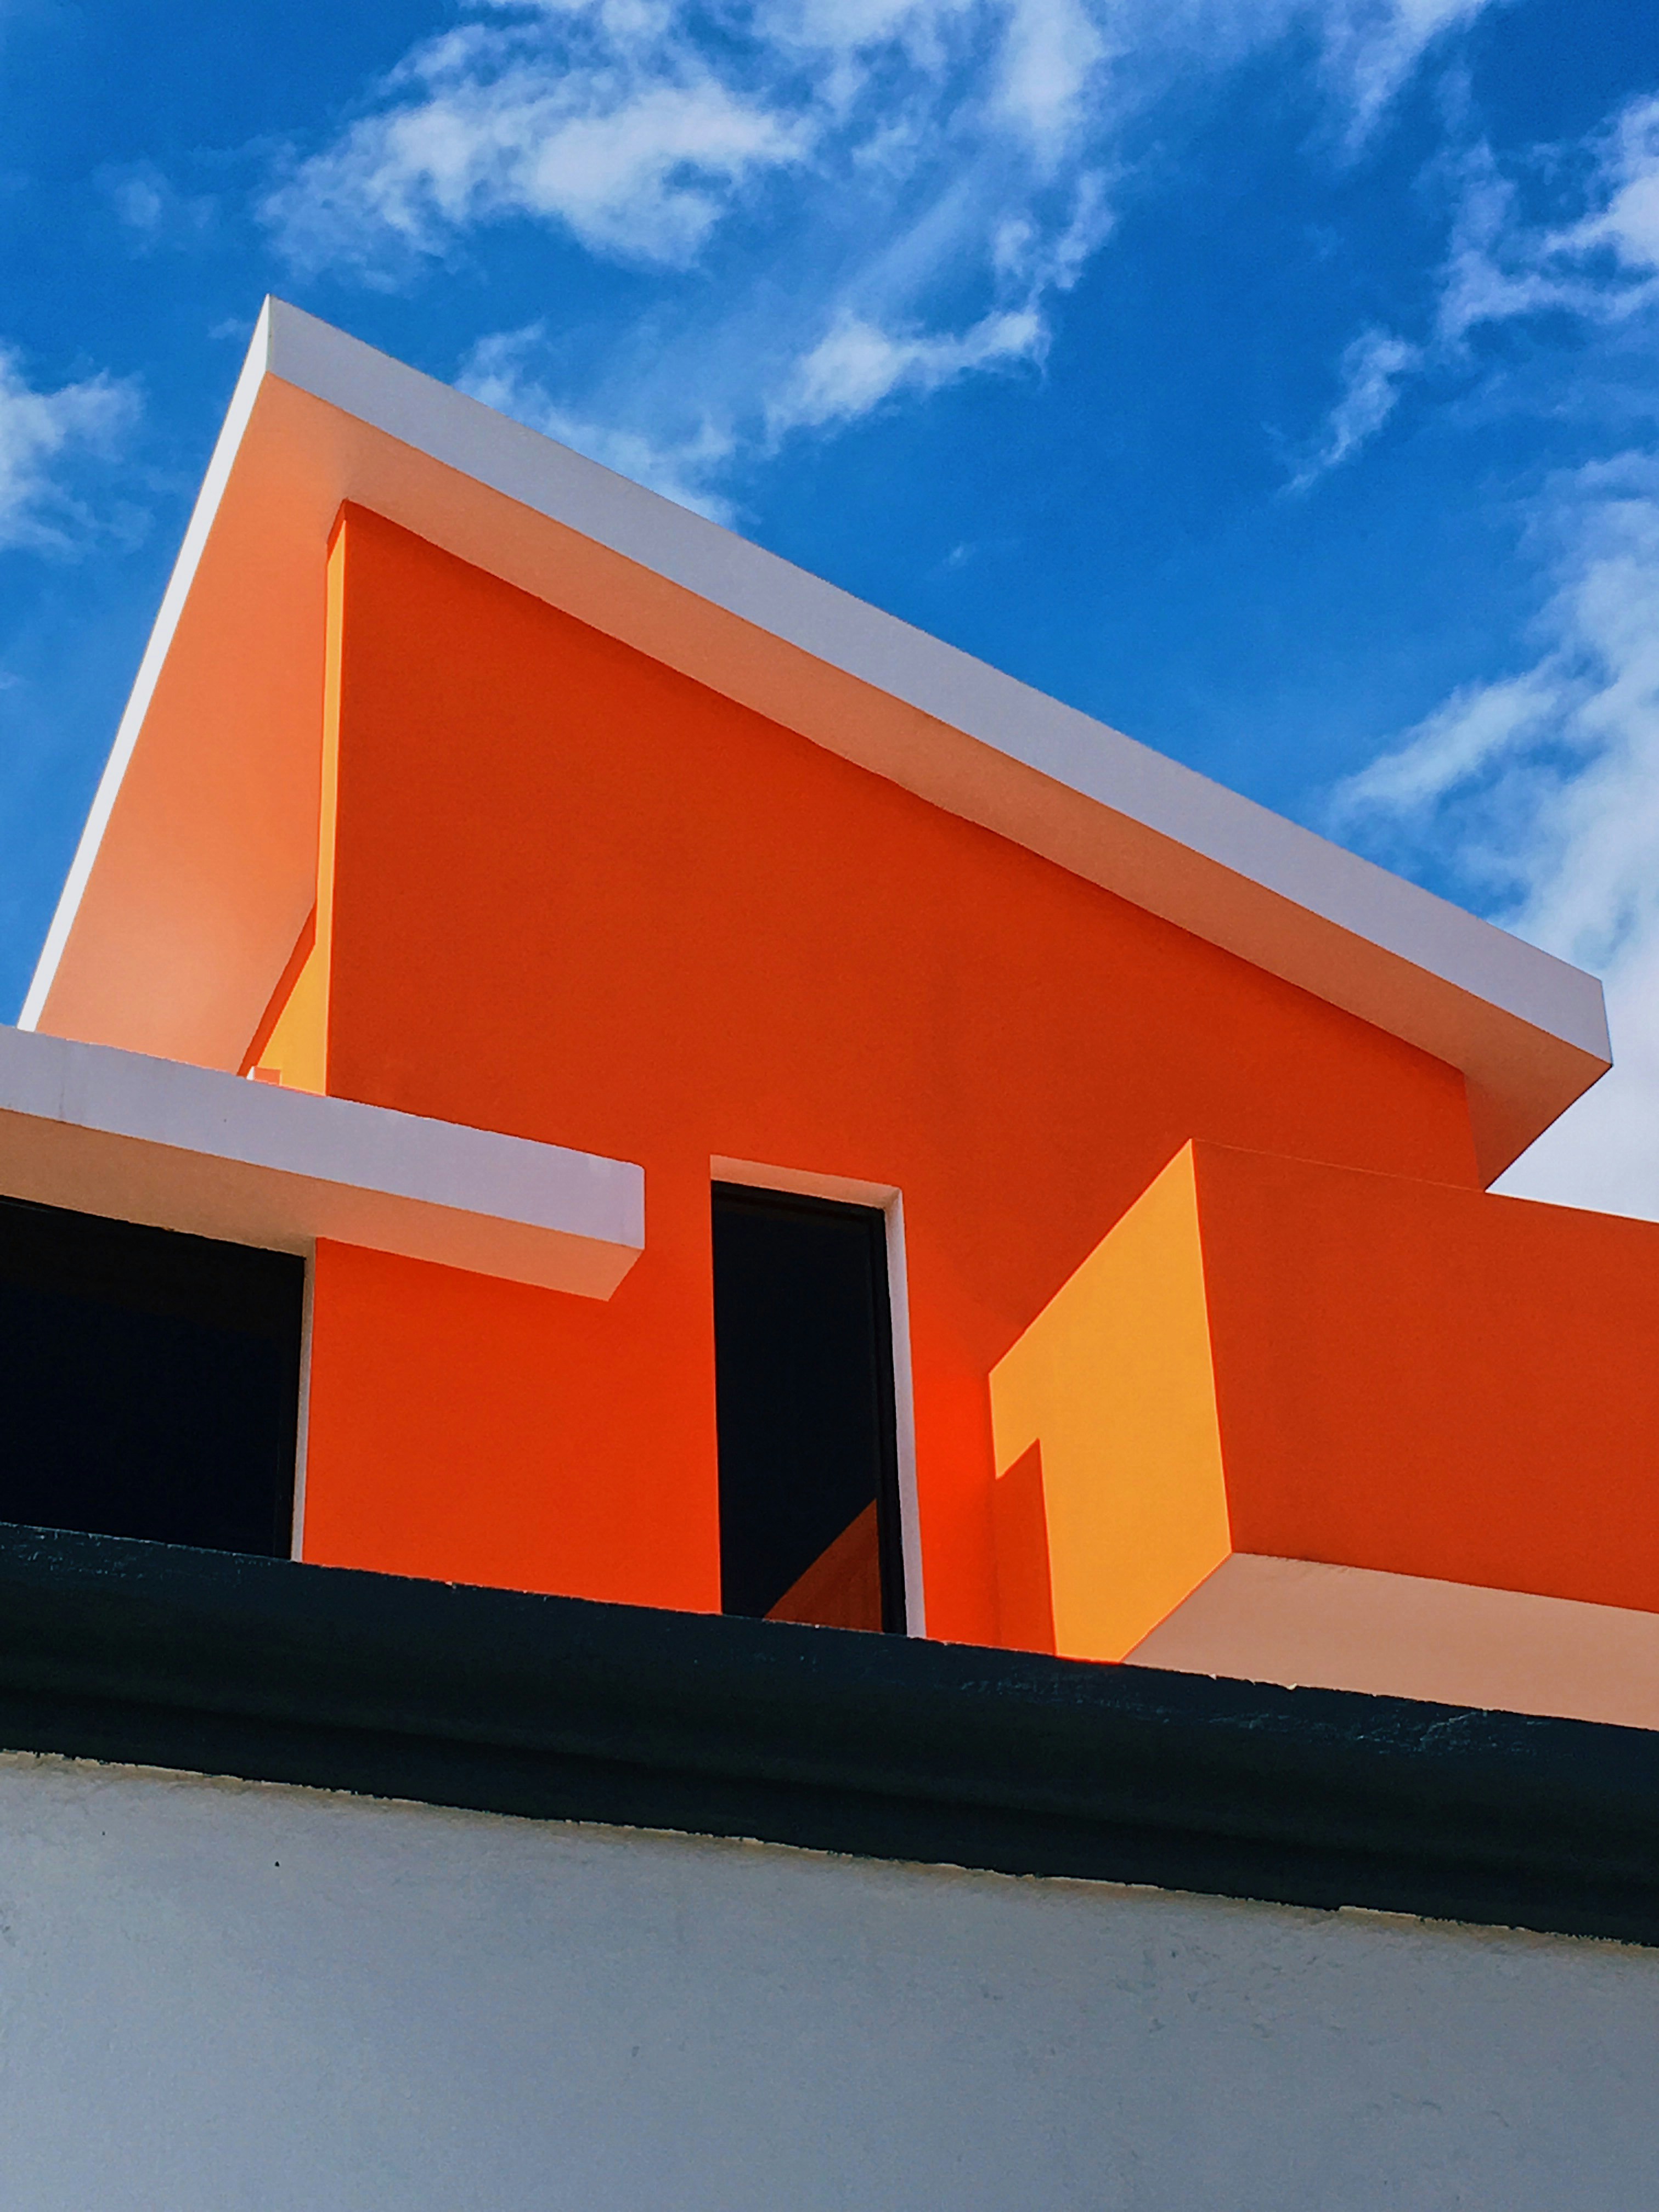 An orange house with a blue sky